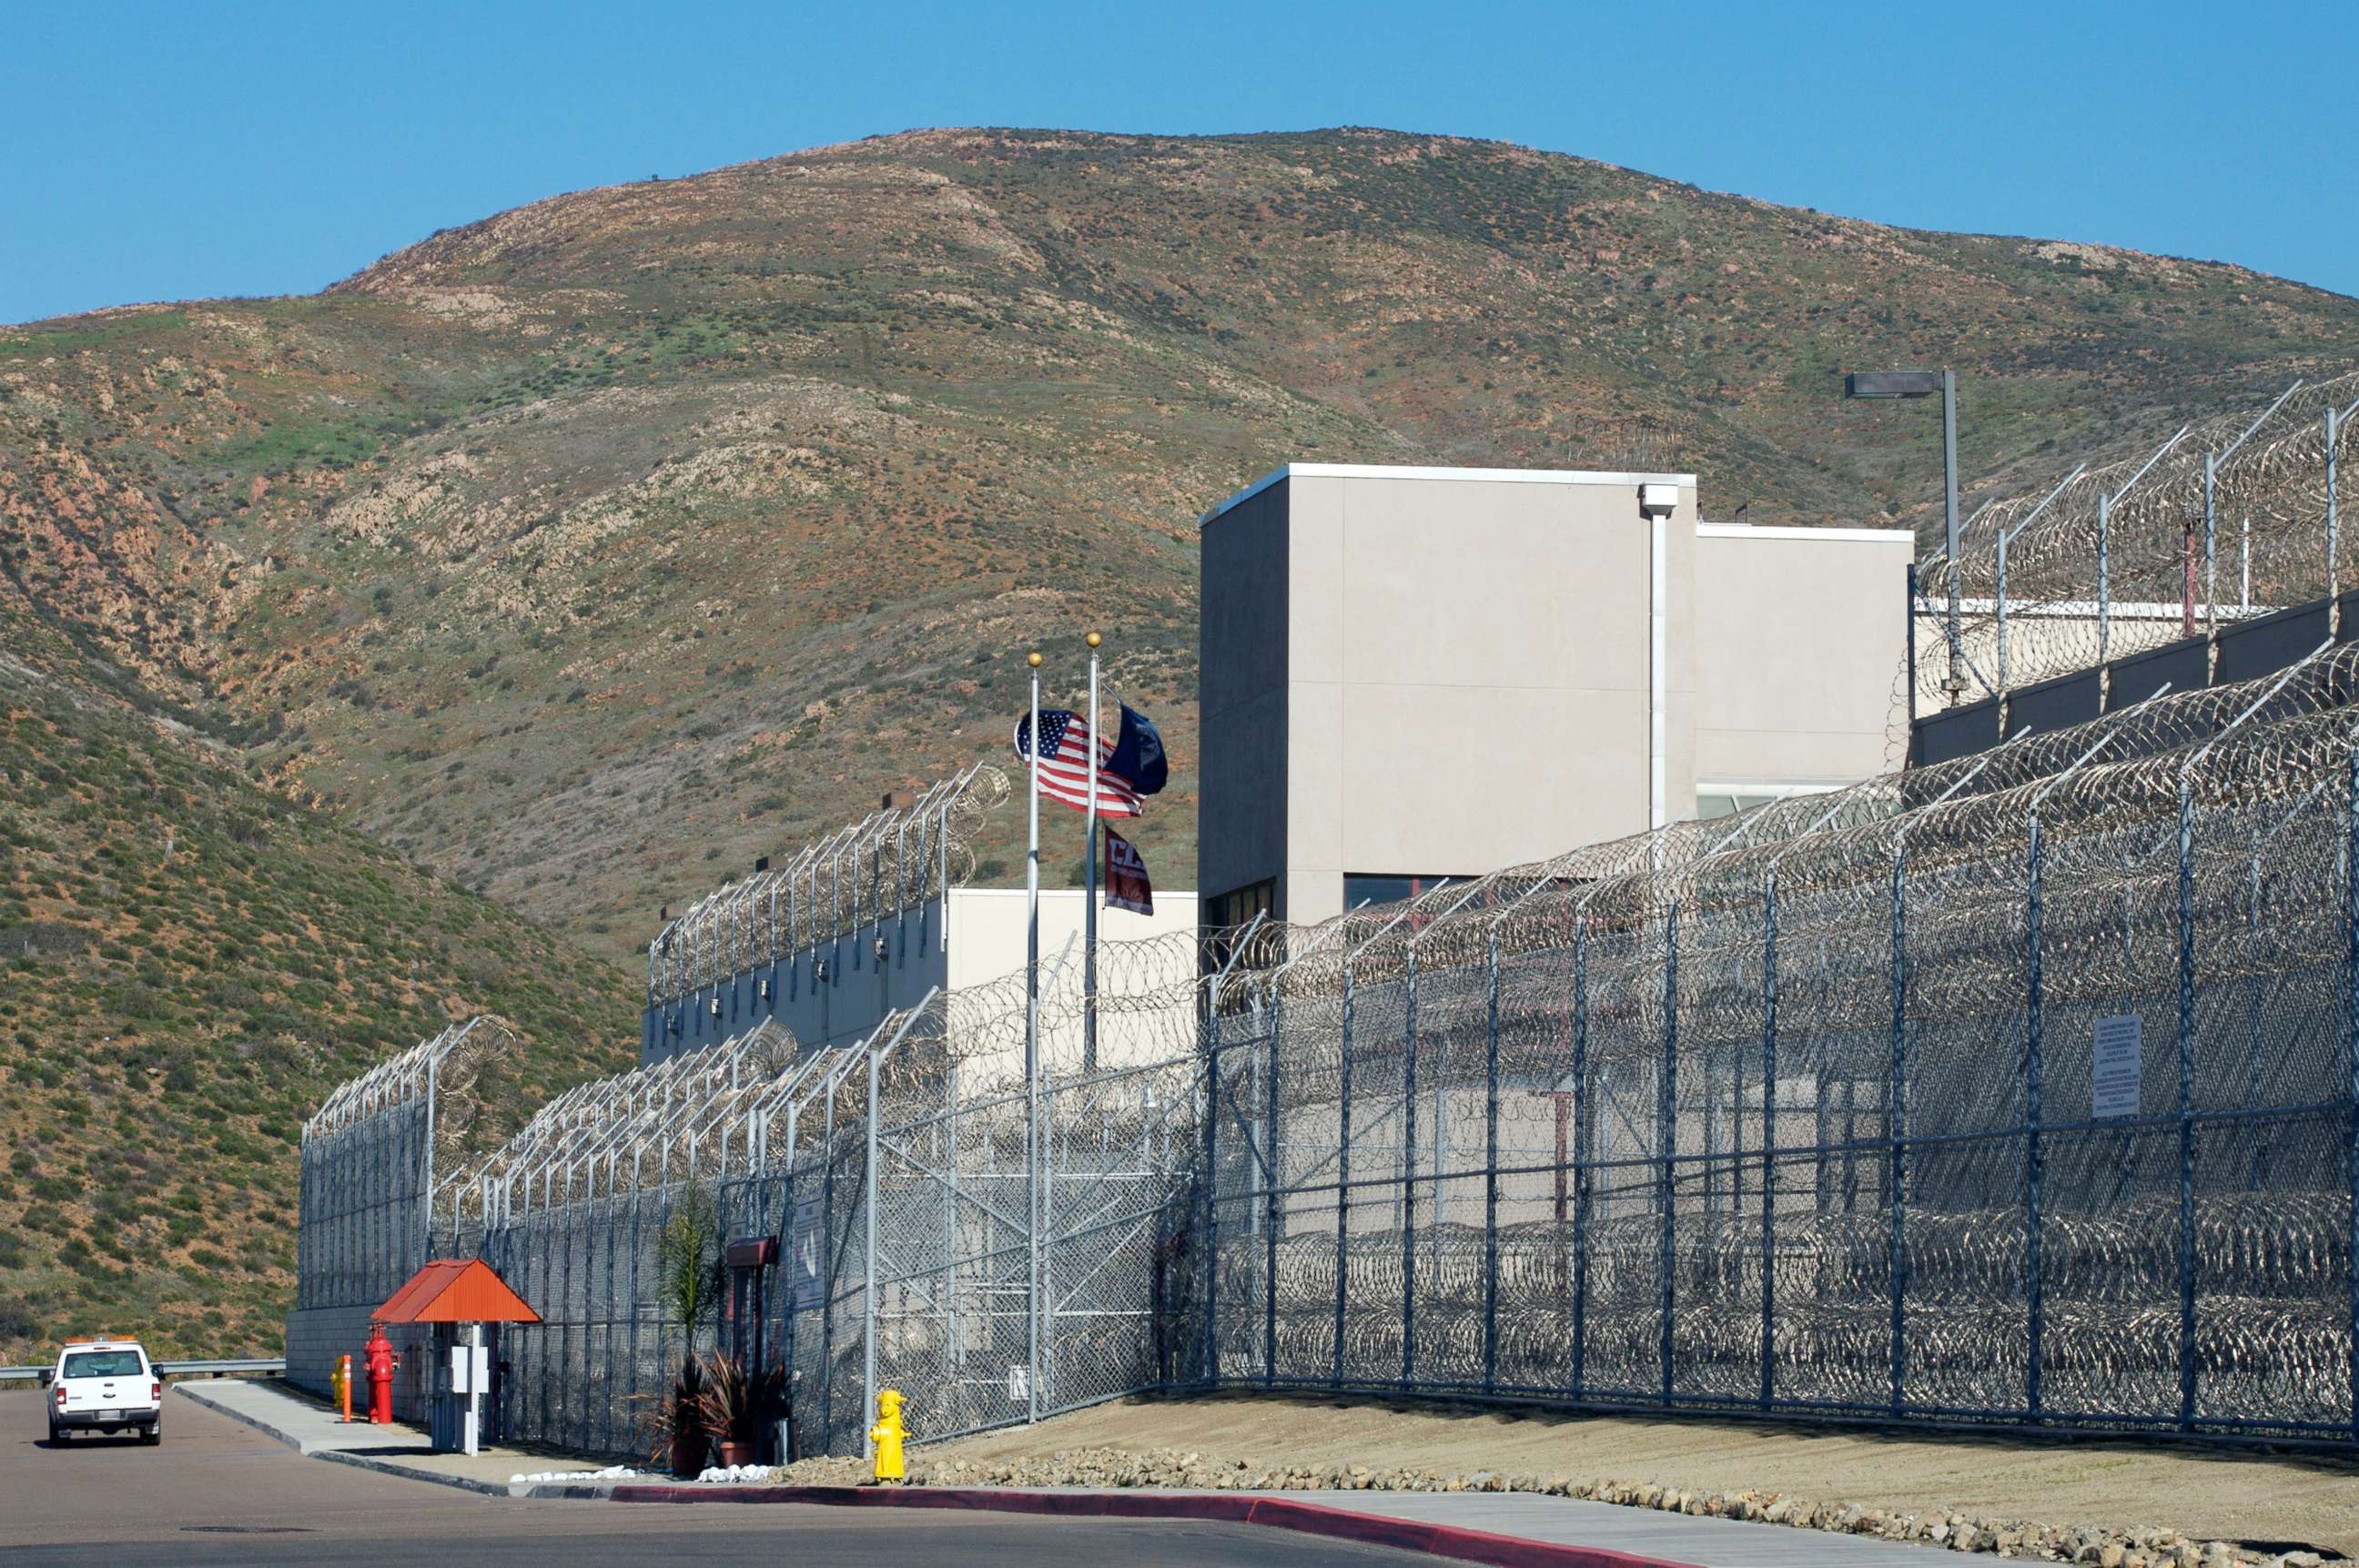 PHOTO: SLUG: NA/CITIZEN1 DATE:   1/23/08 PHOTOG:  Sarah L. Voisin LOCATION:  San Diego, CA NEG NUMBER:  197420 CAPTION:  The Otay Mesa Detention Center.StaffPhoto imported to Merlin on  Thu May  1 19:33:10 2008